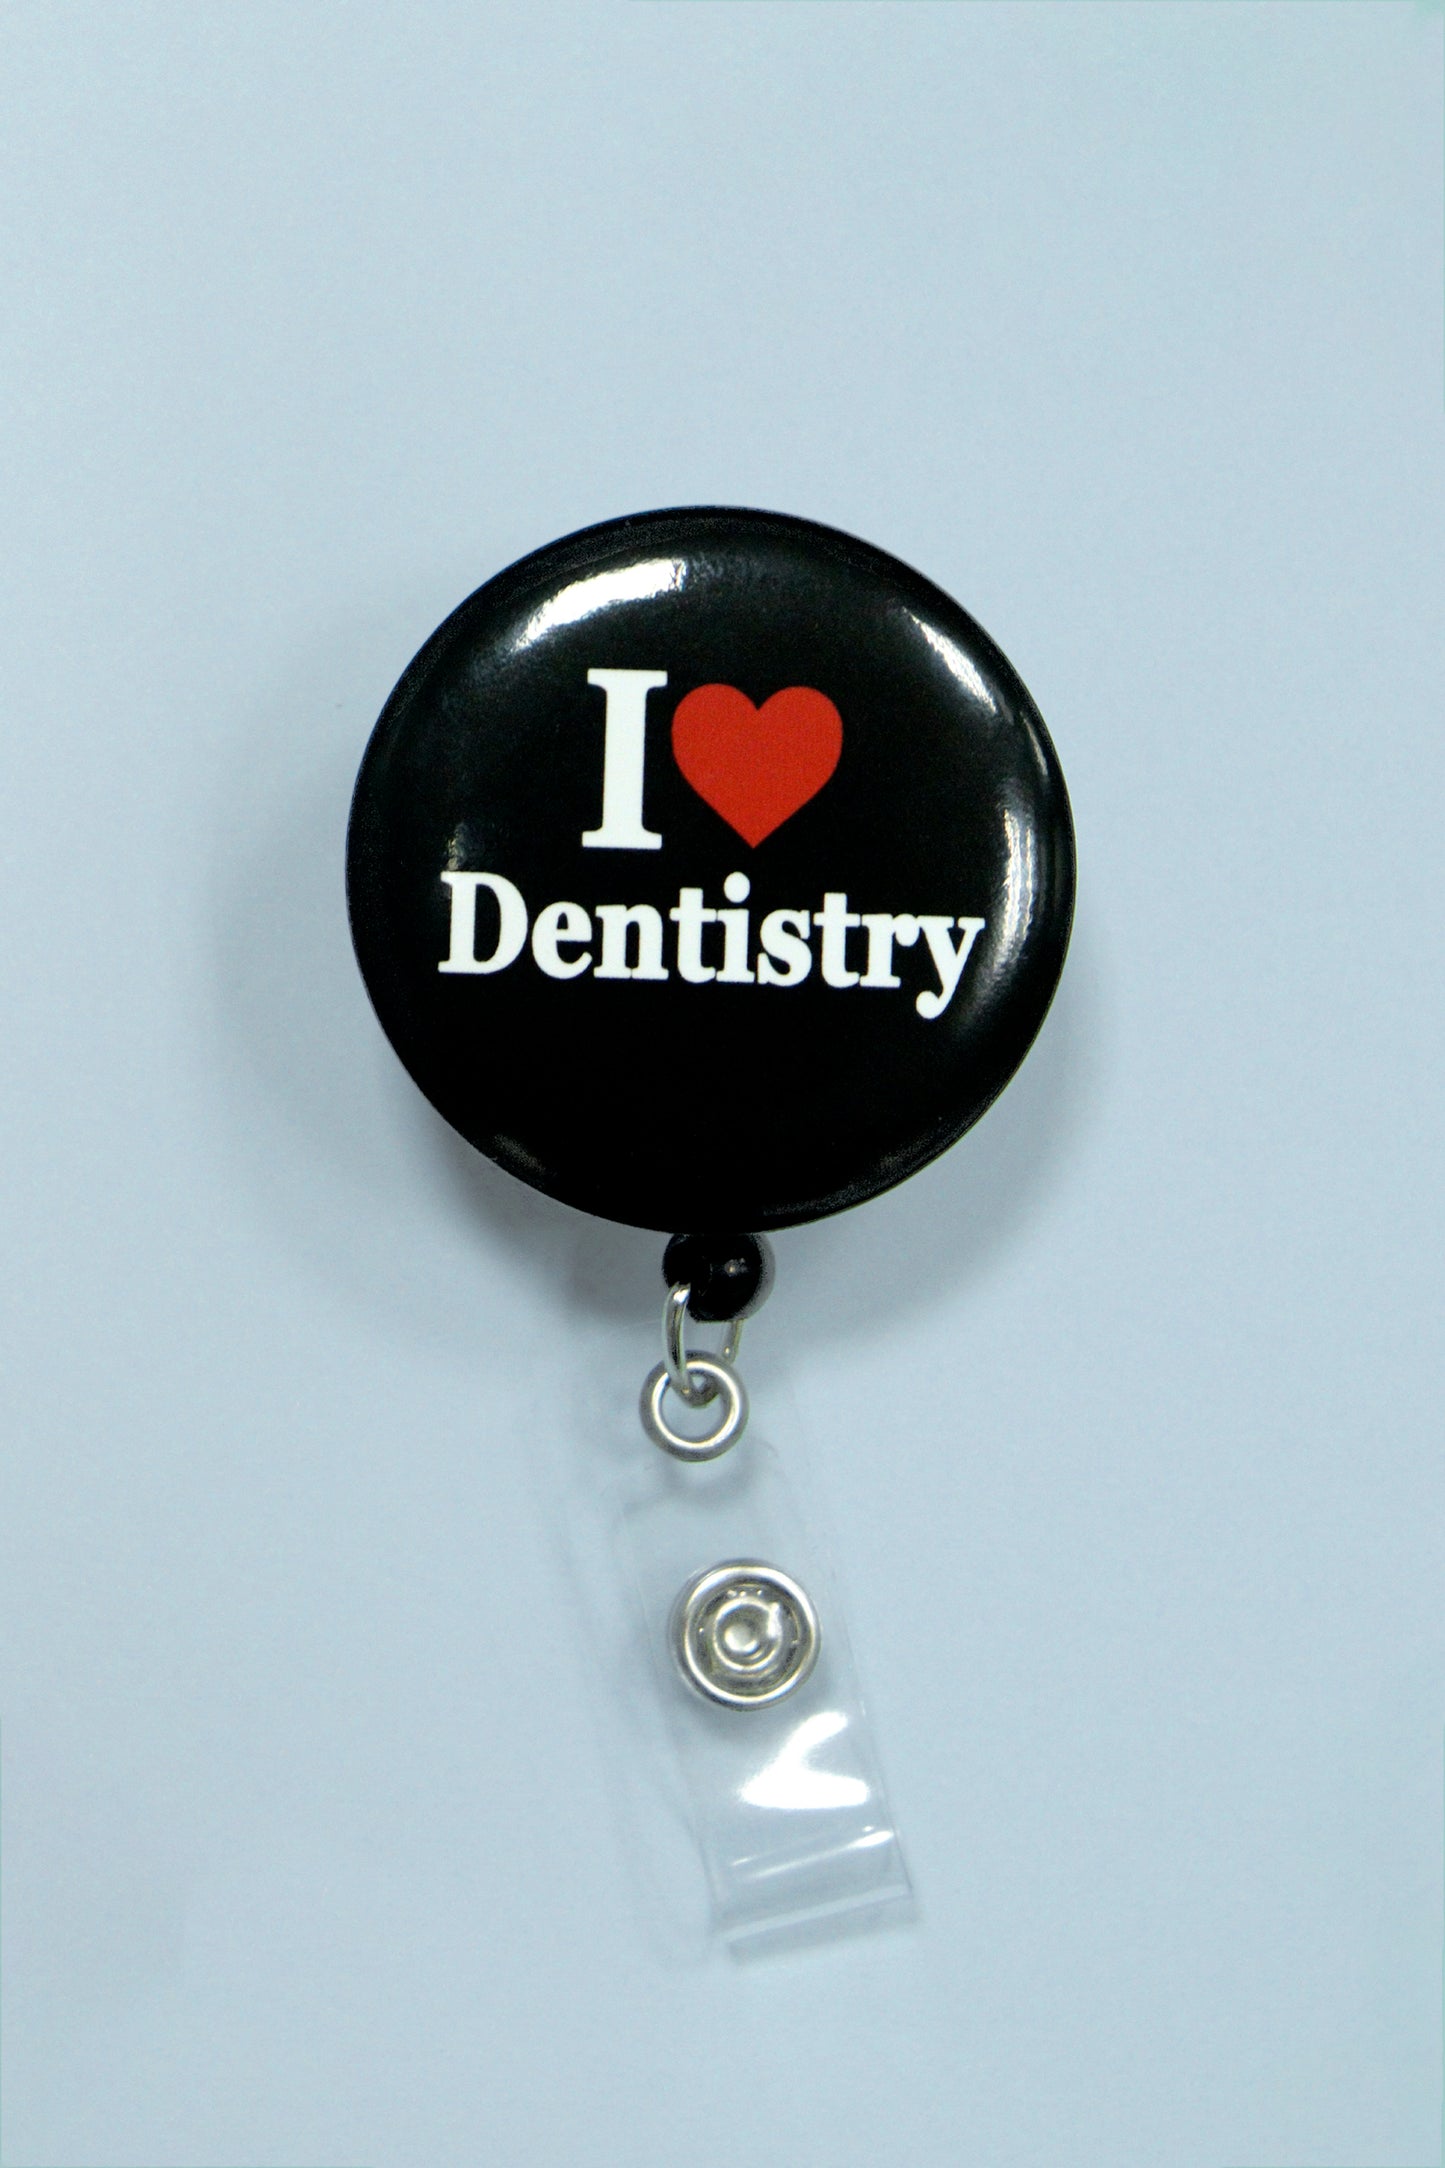 I Love Dentistry ID Badge